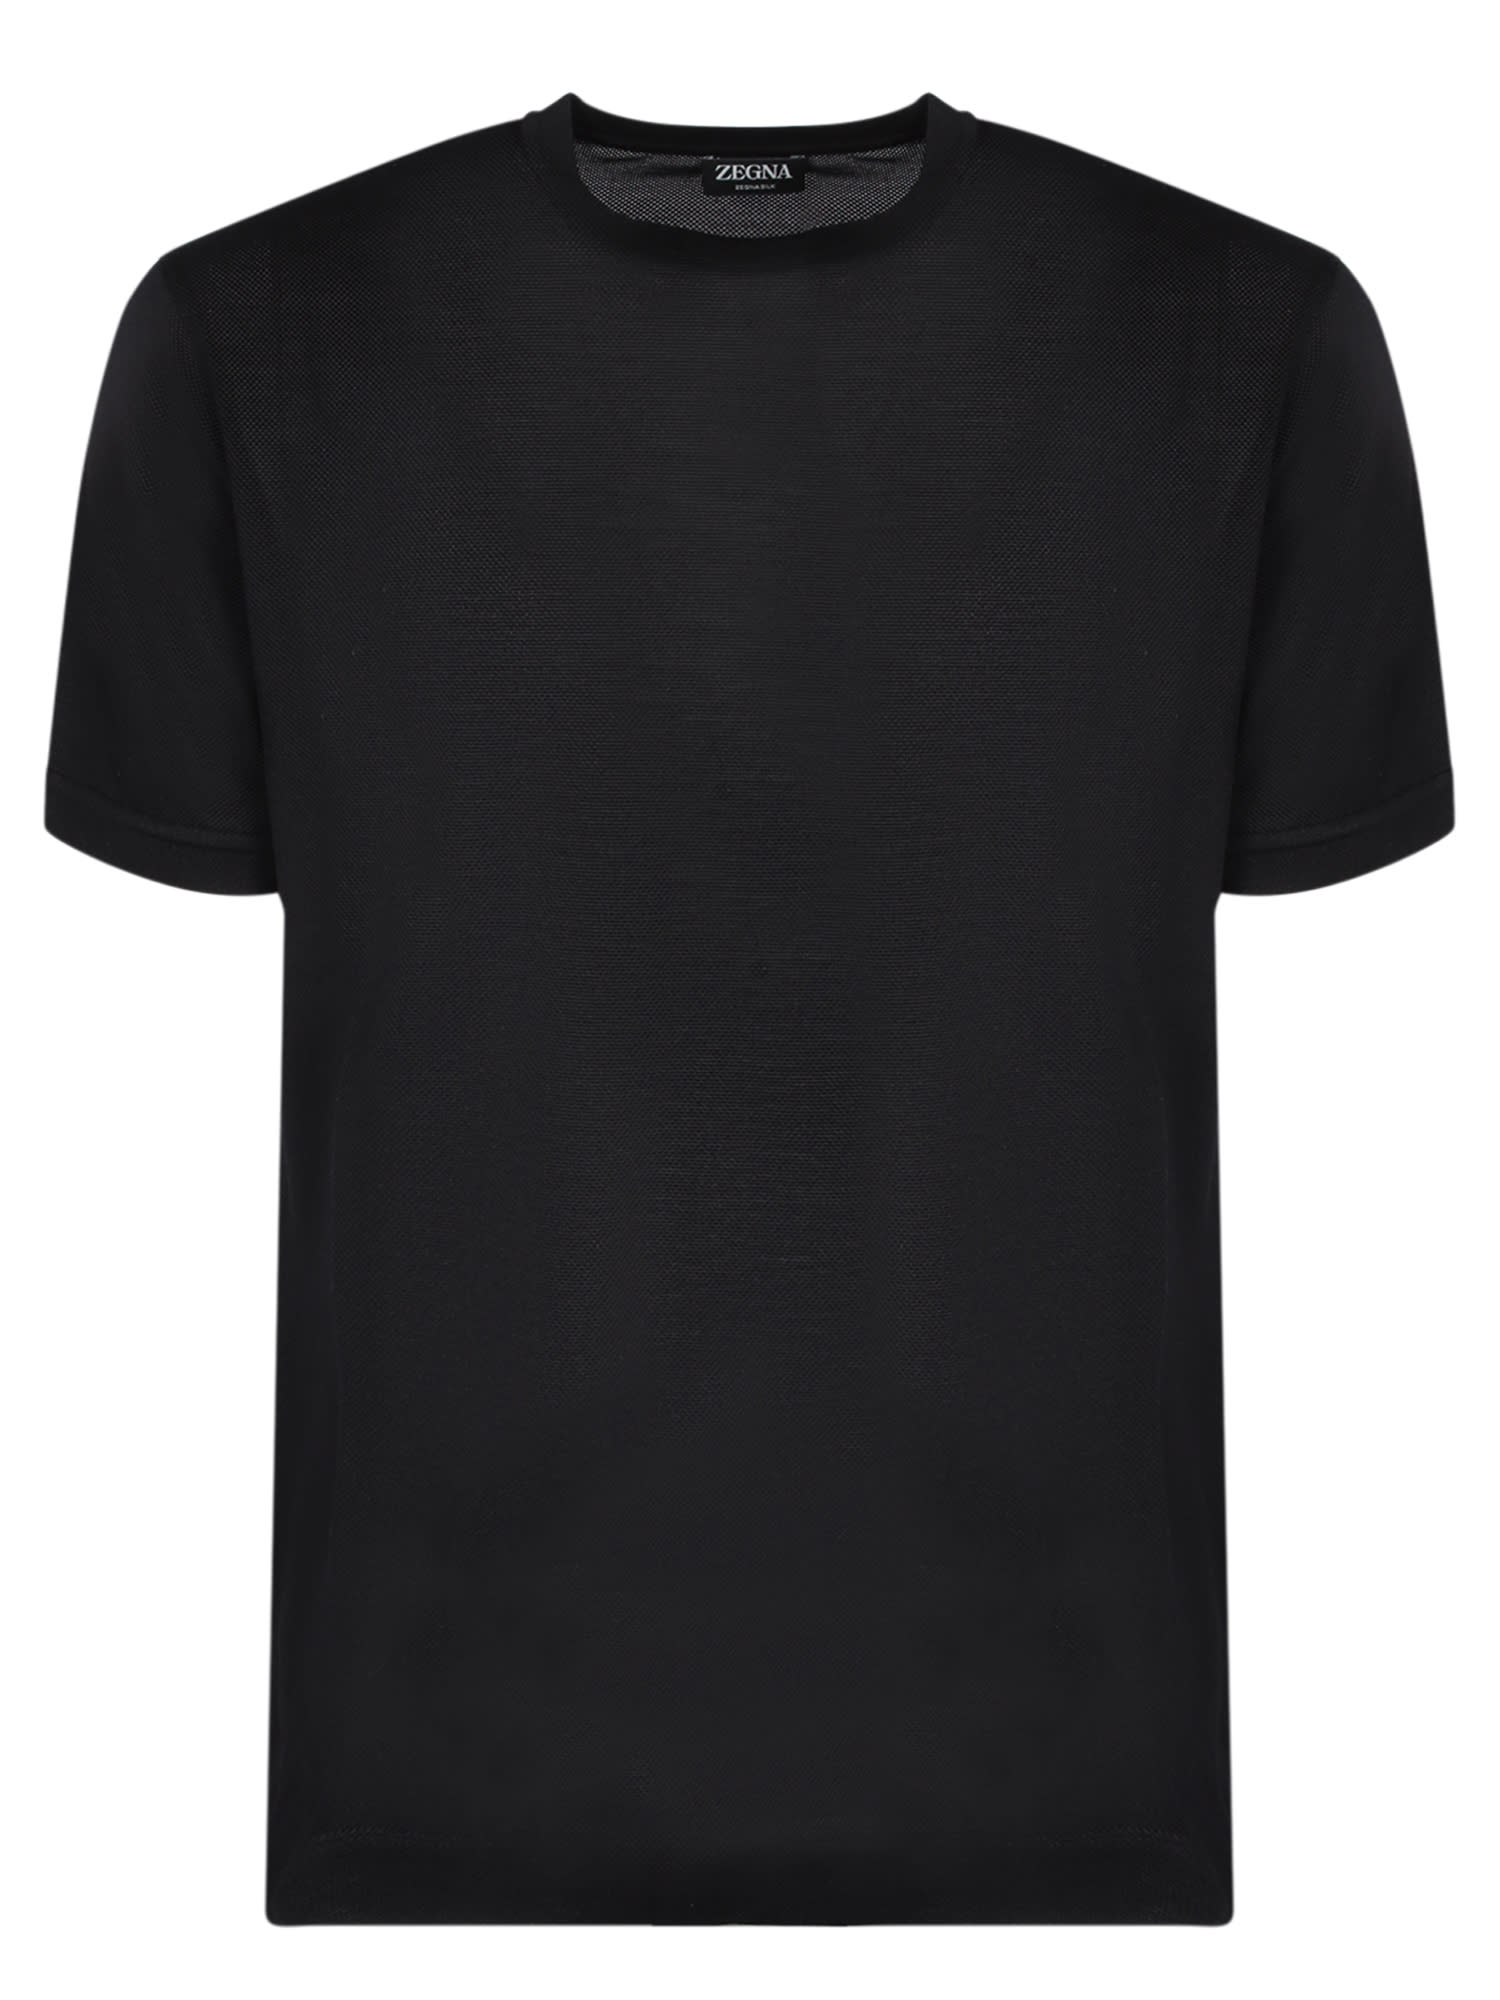 Zegna Black Silk T-shirt